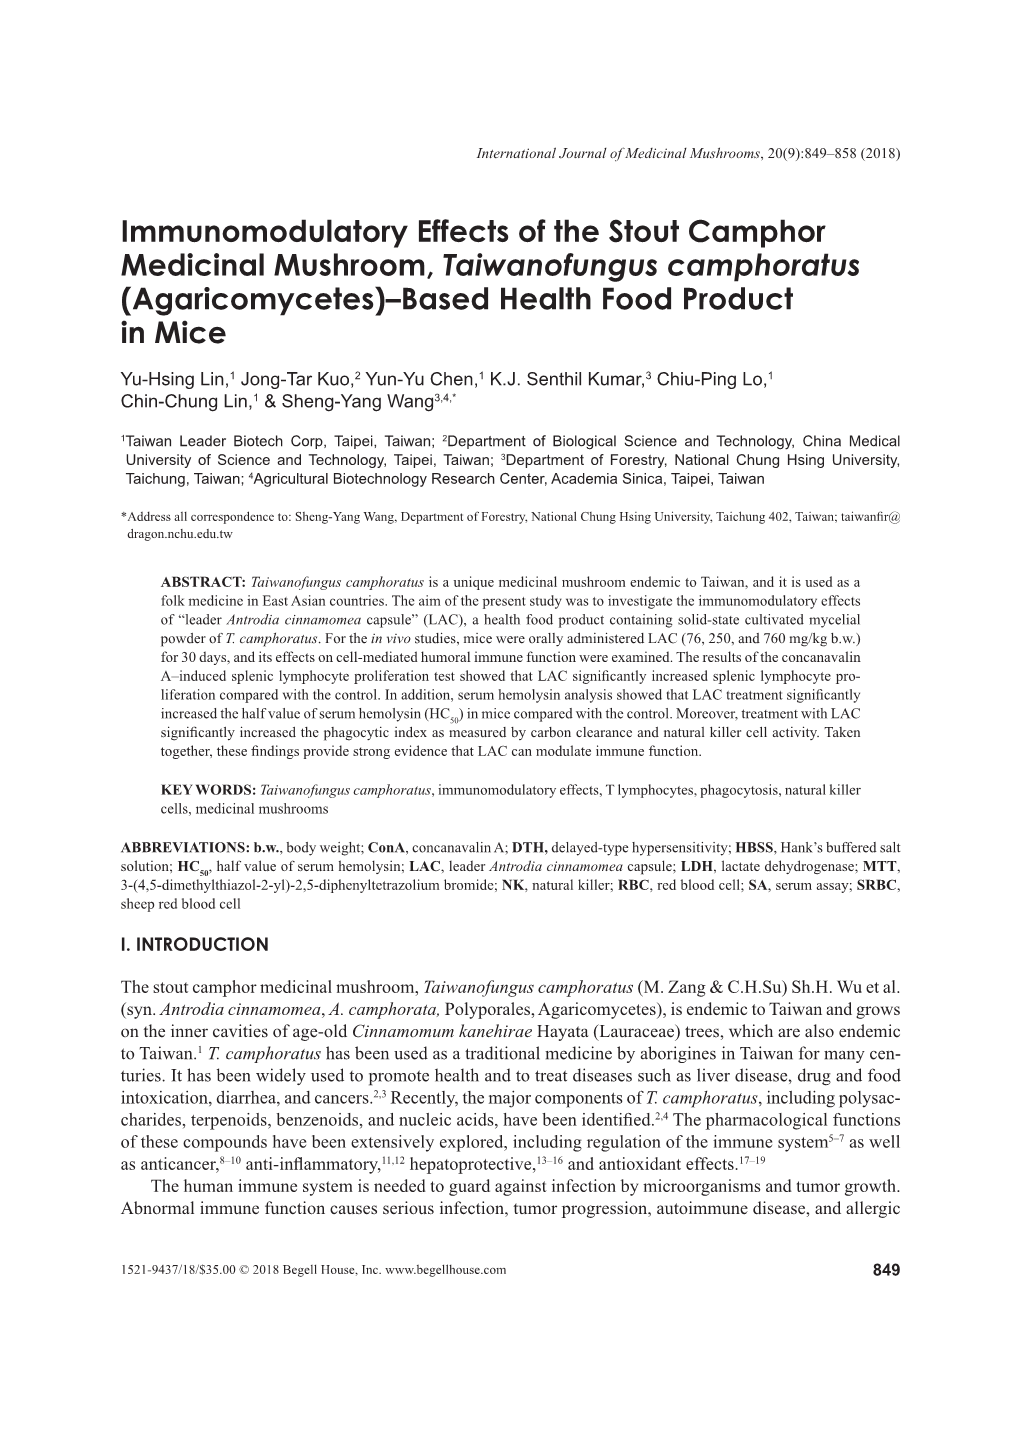 Immunomodulatory Effects of the Stout Camphor Medicinal Mushroom, Taiwanofungus Camphoratus (Agaricomycetes)–Based Health Food Product in Mice